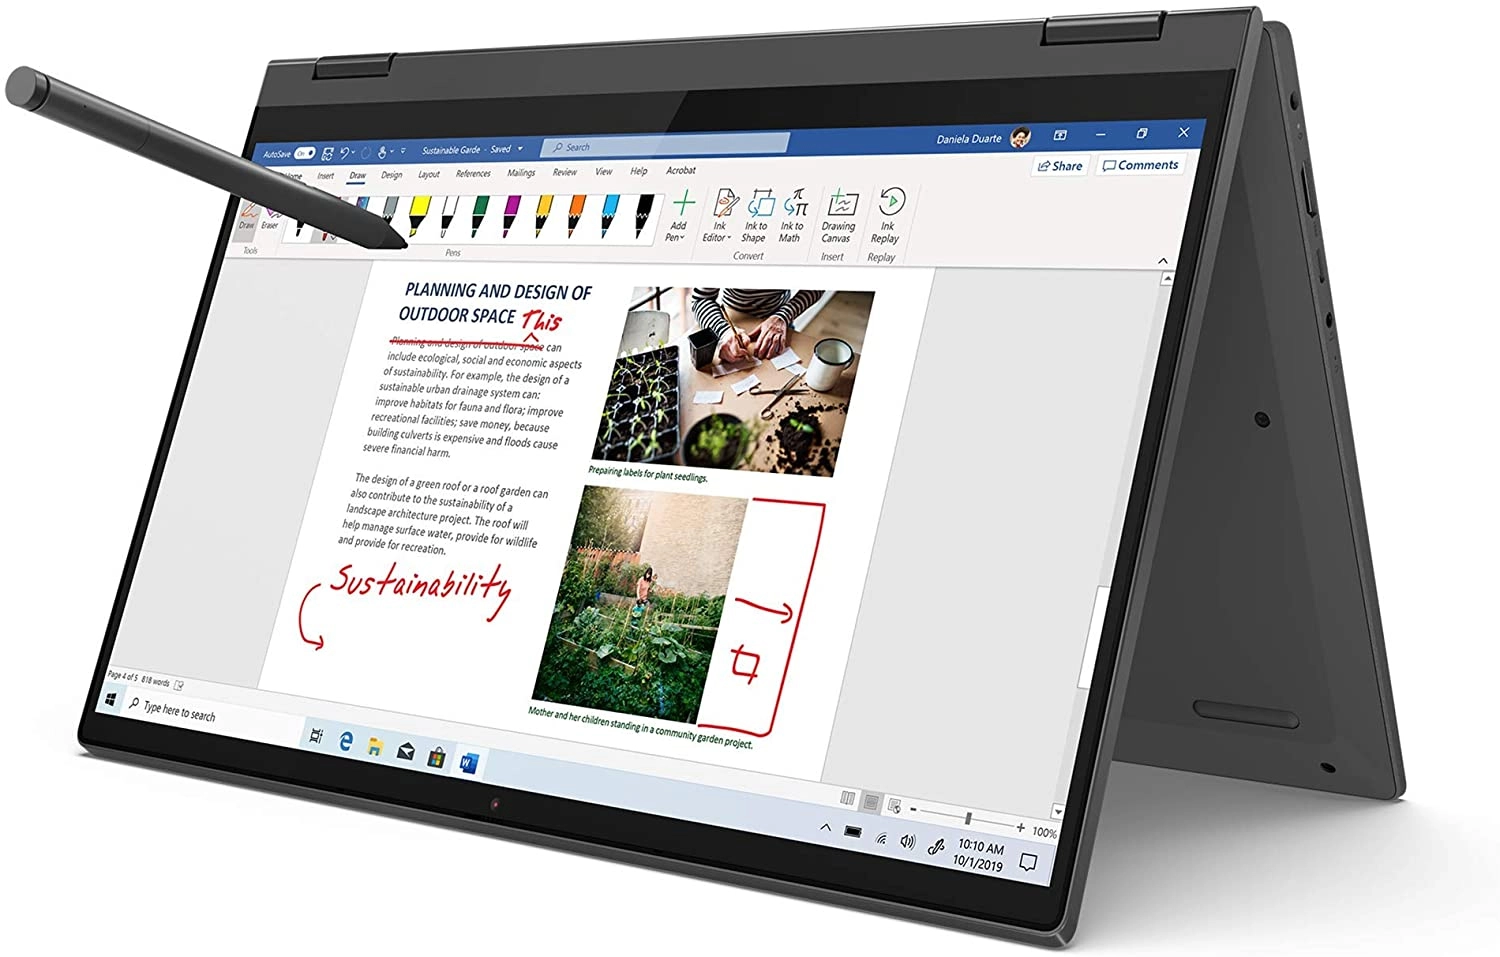 Lenovo IdeaPad Flex 5 14ARE05 laptop image